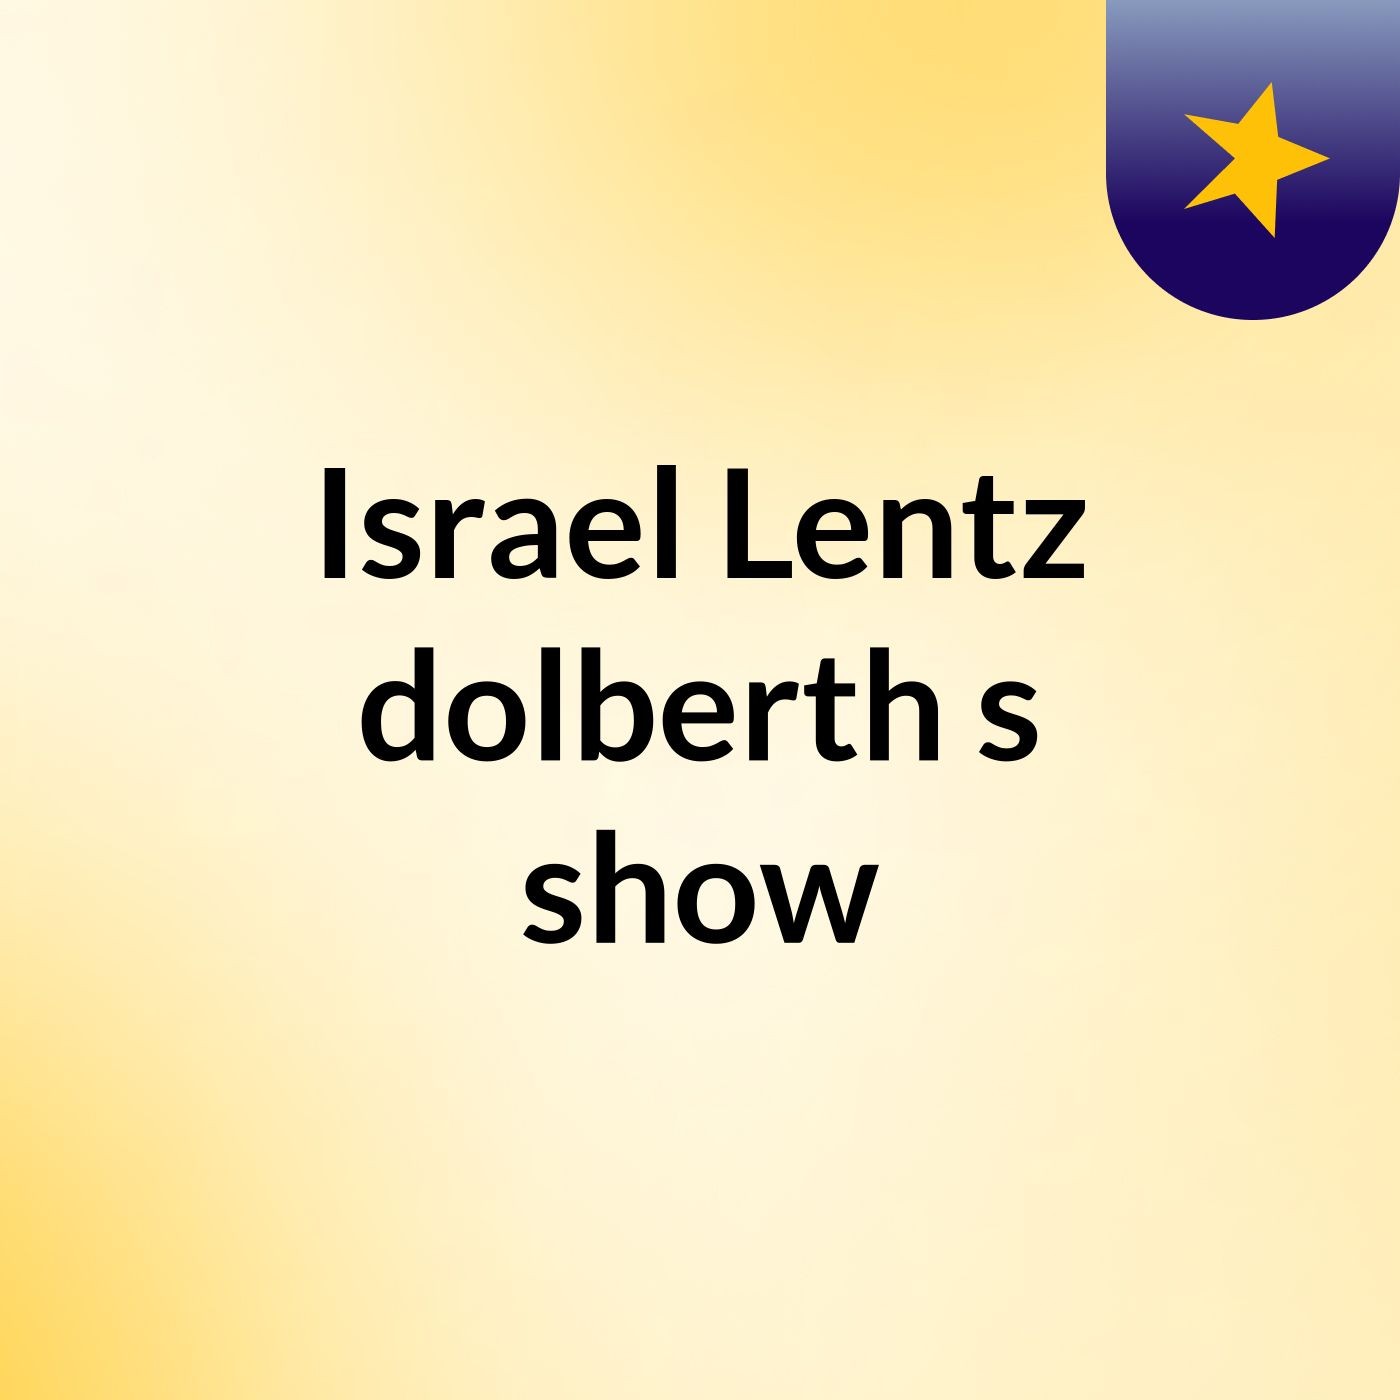 Israel Lentz dolberth's show